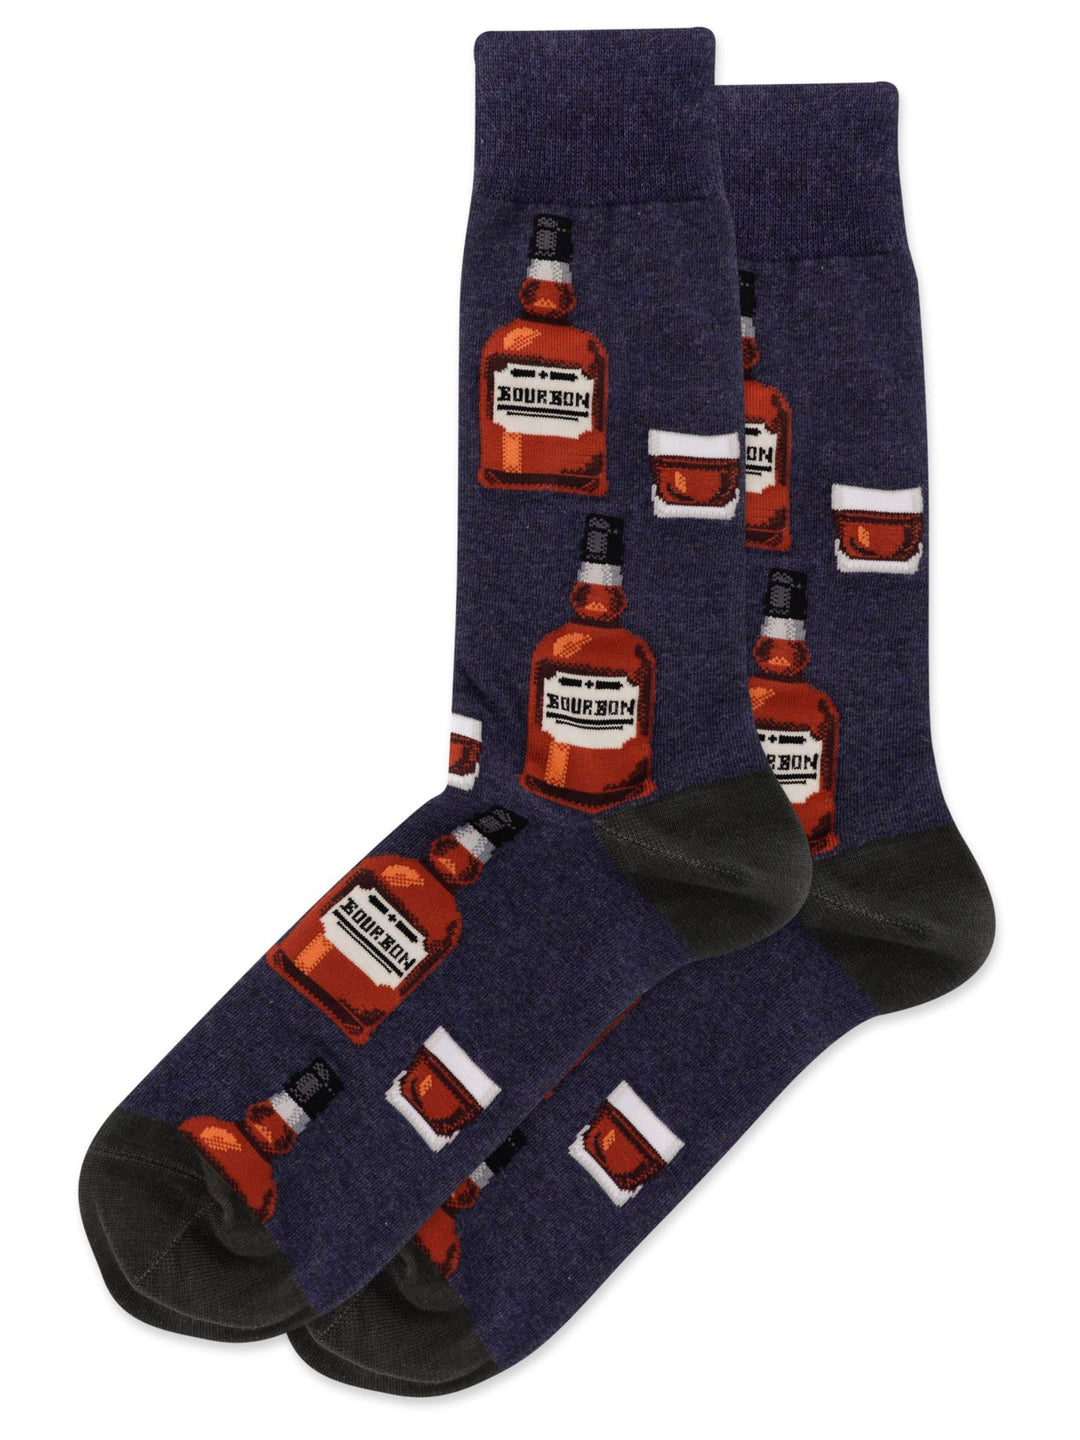 Hot Sox "Bourbon" Cotton Crew Socks - Large